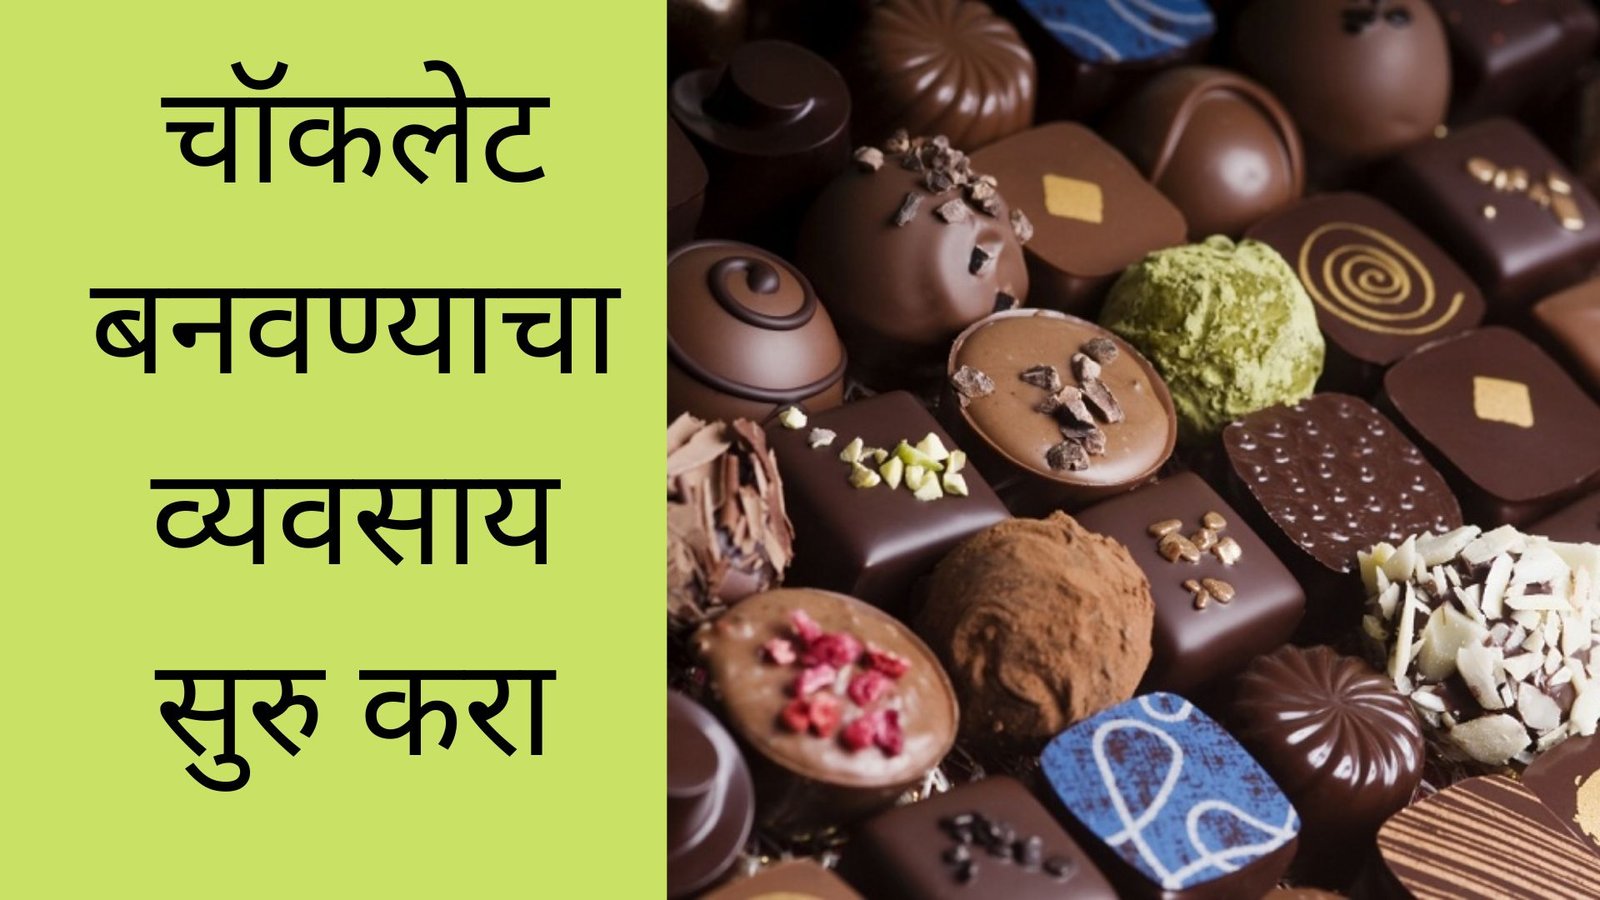 चॉकलेट बनवण्याचा व्यवसाय सुरु करा | Chocolate Making Business Information In Marathi